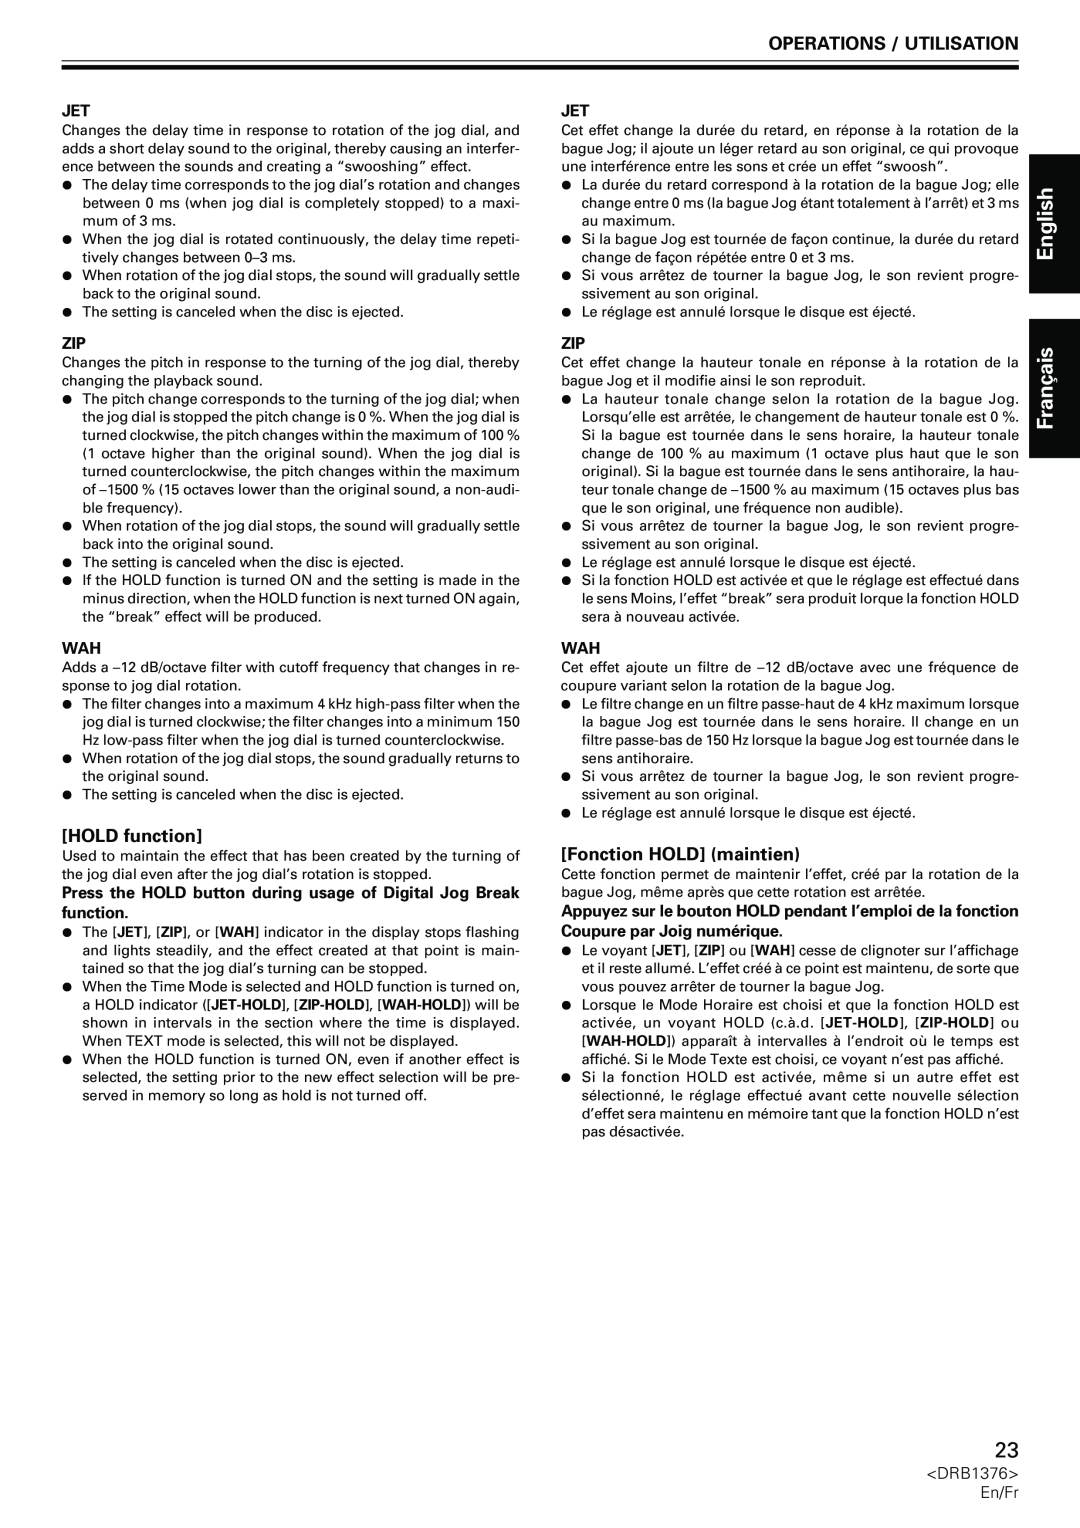 Pioneer CDJ-200 manual HOLD function, Fonction HOLD maintien, English, Français, Operations / Utilisation 